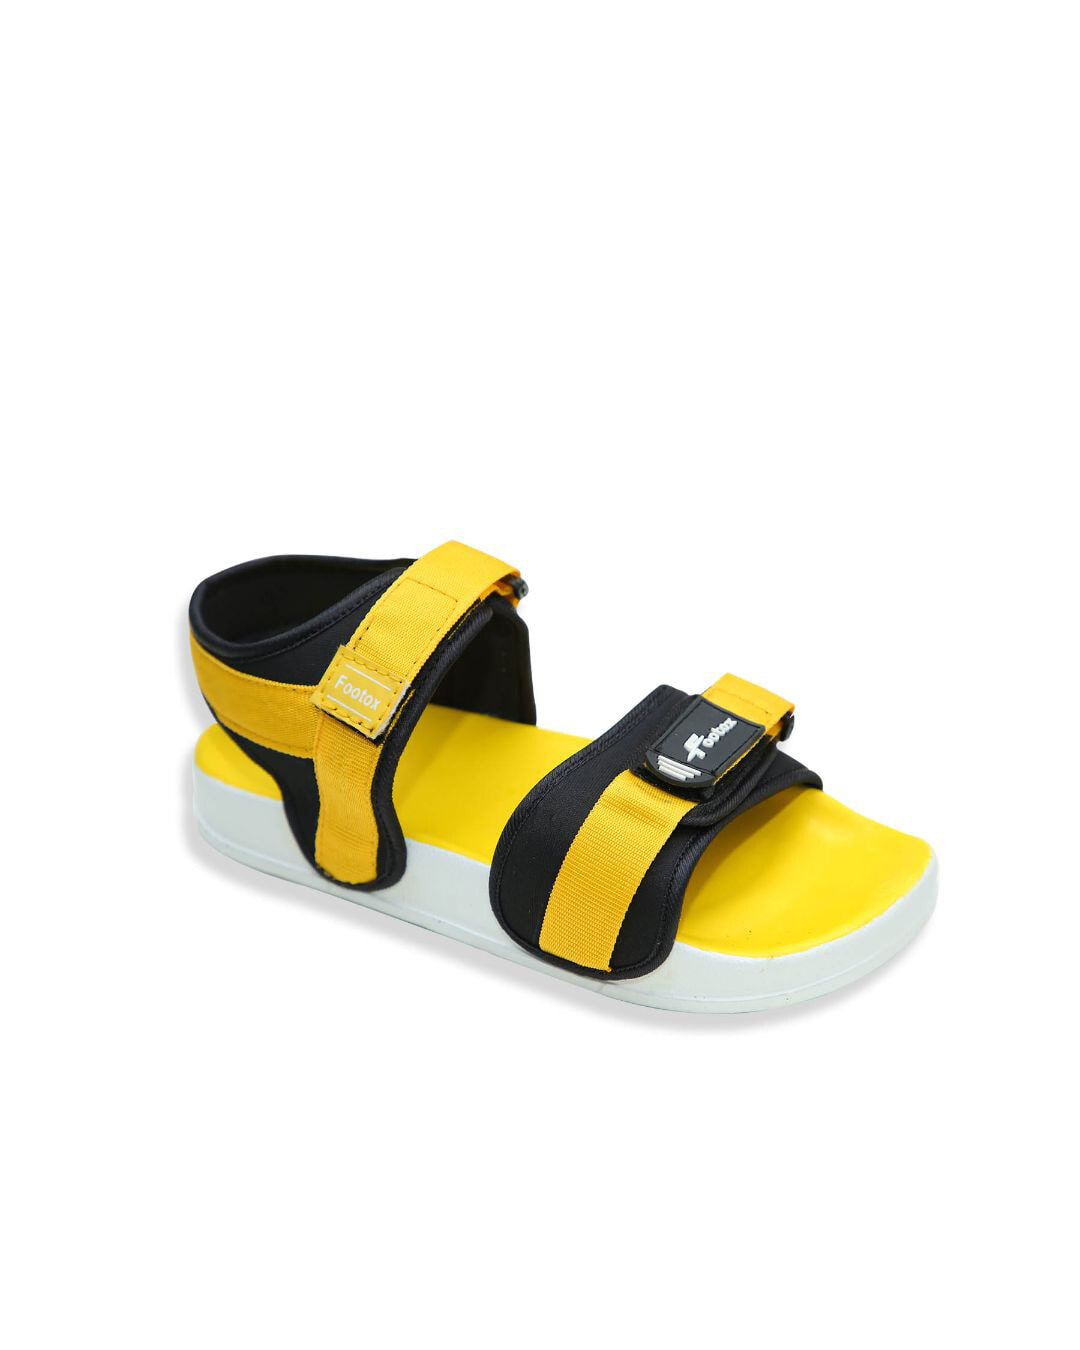 Shop Yellow Comfort Sandals For Men-Back